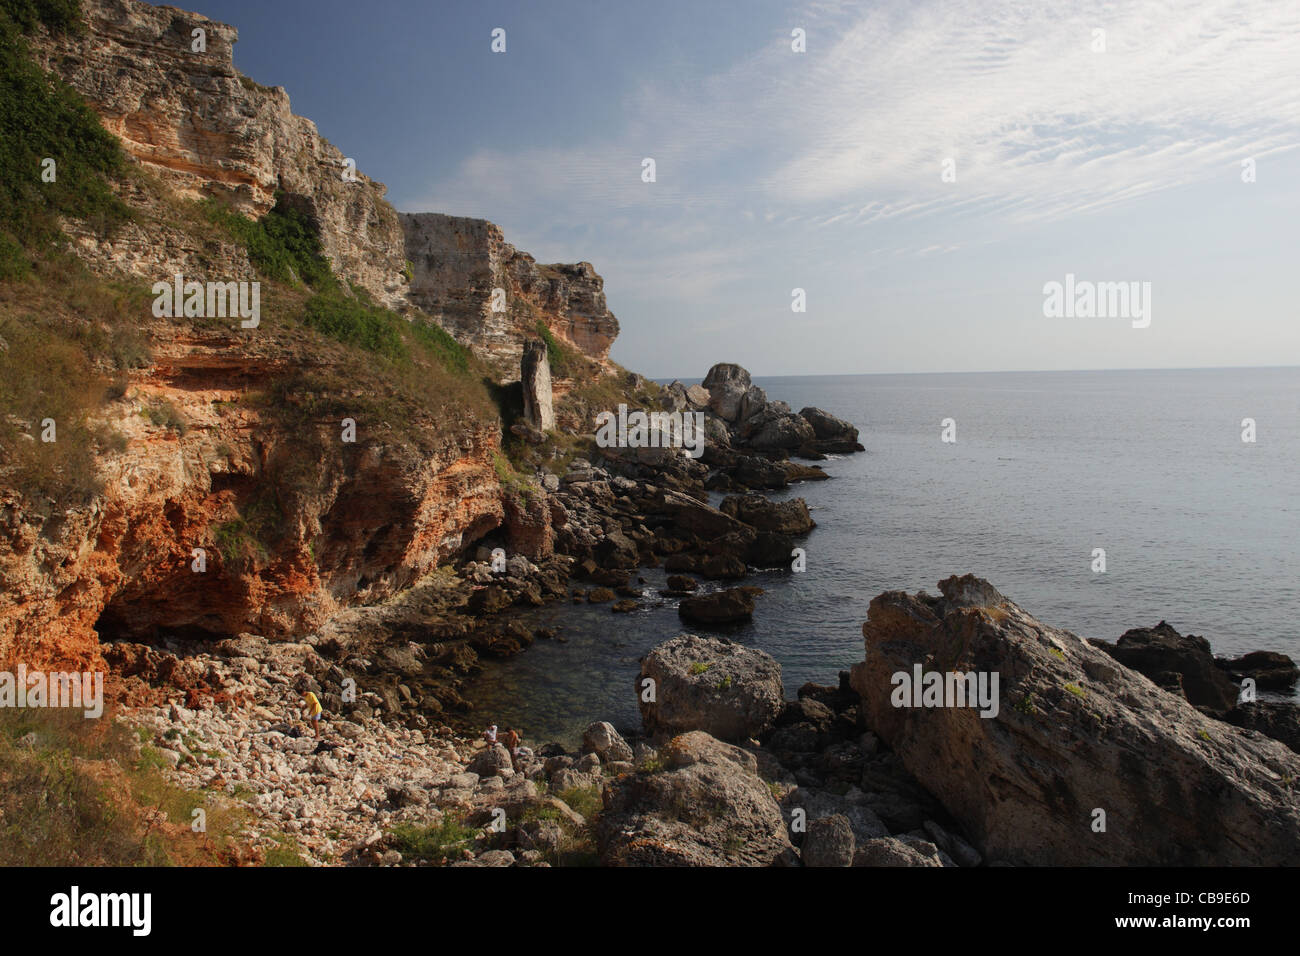 Northern Black Sea Coast with stone cliffs, Bulgaria Stock Photo